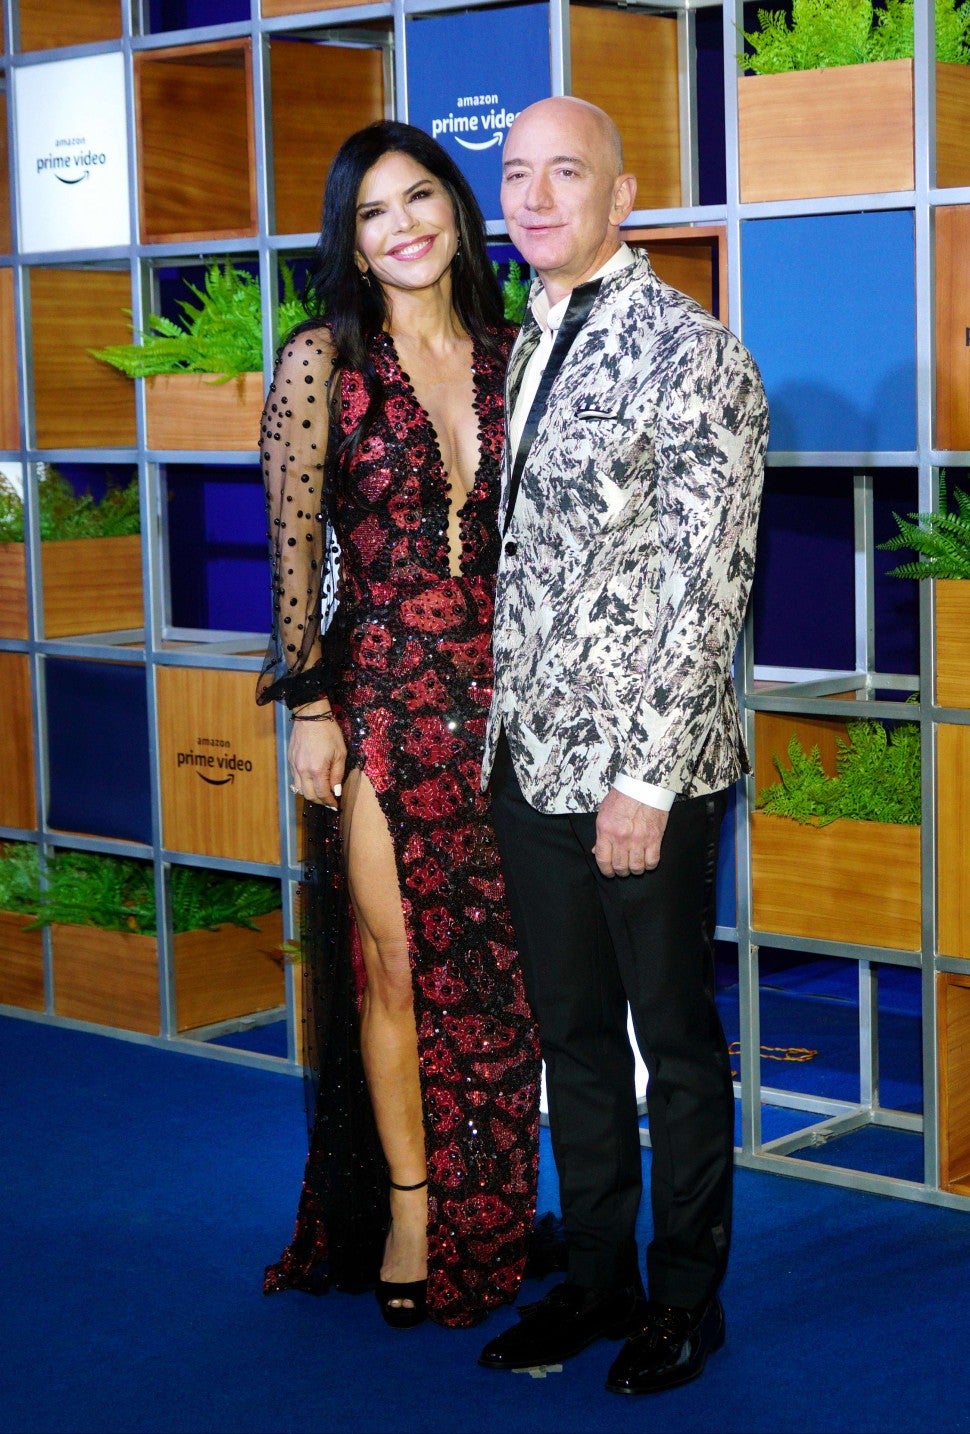 Jeff Bezos and Girlfriend Lauren Sanchez Make Their Red Carpet Debut as a  Couple | Entertainment Tonight